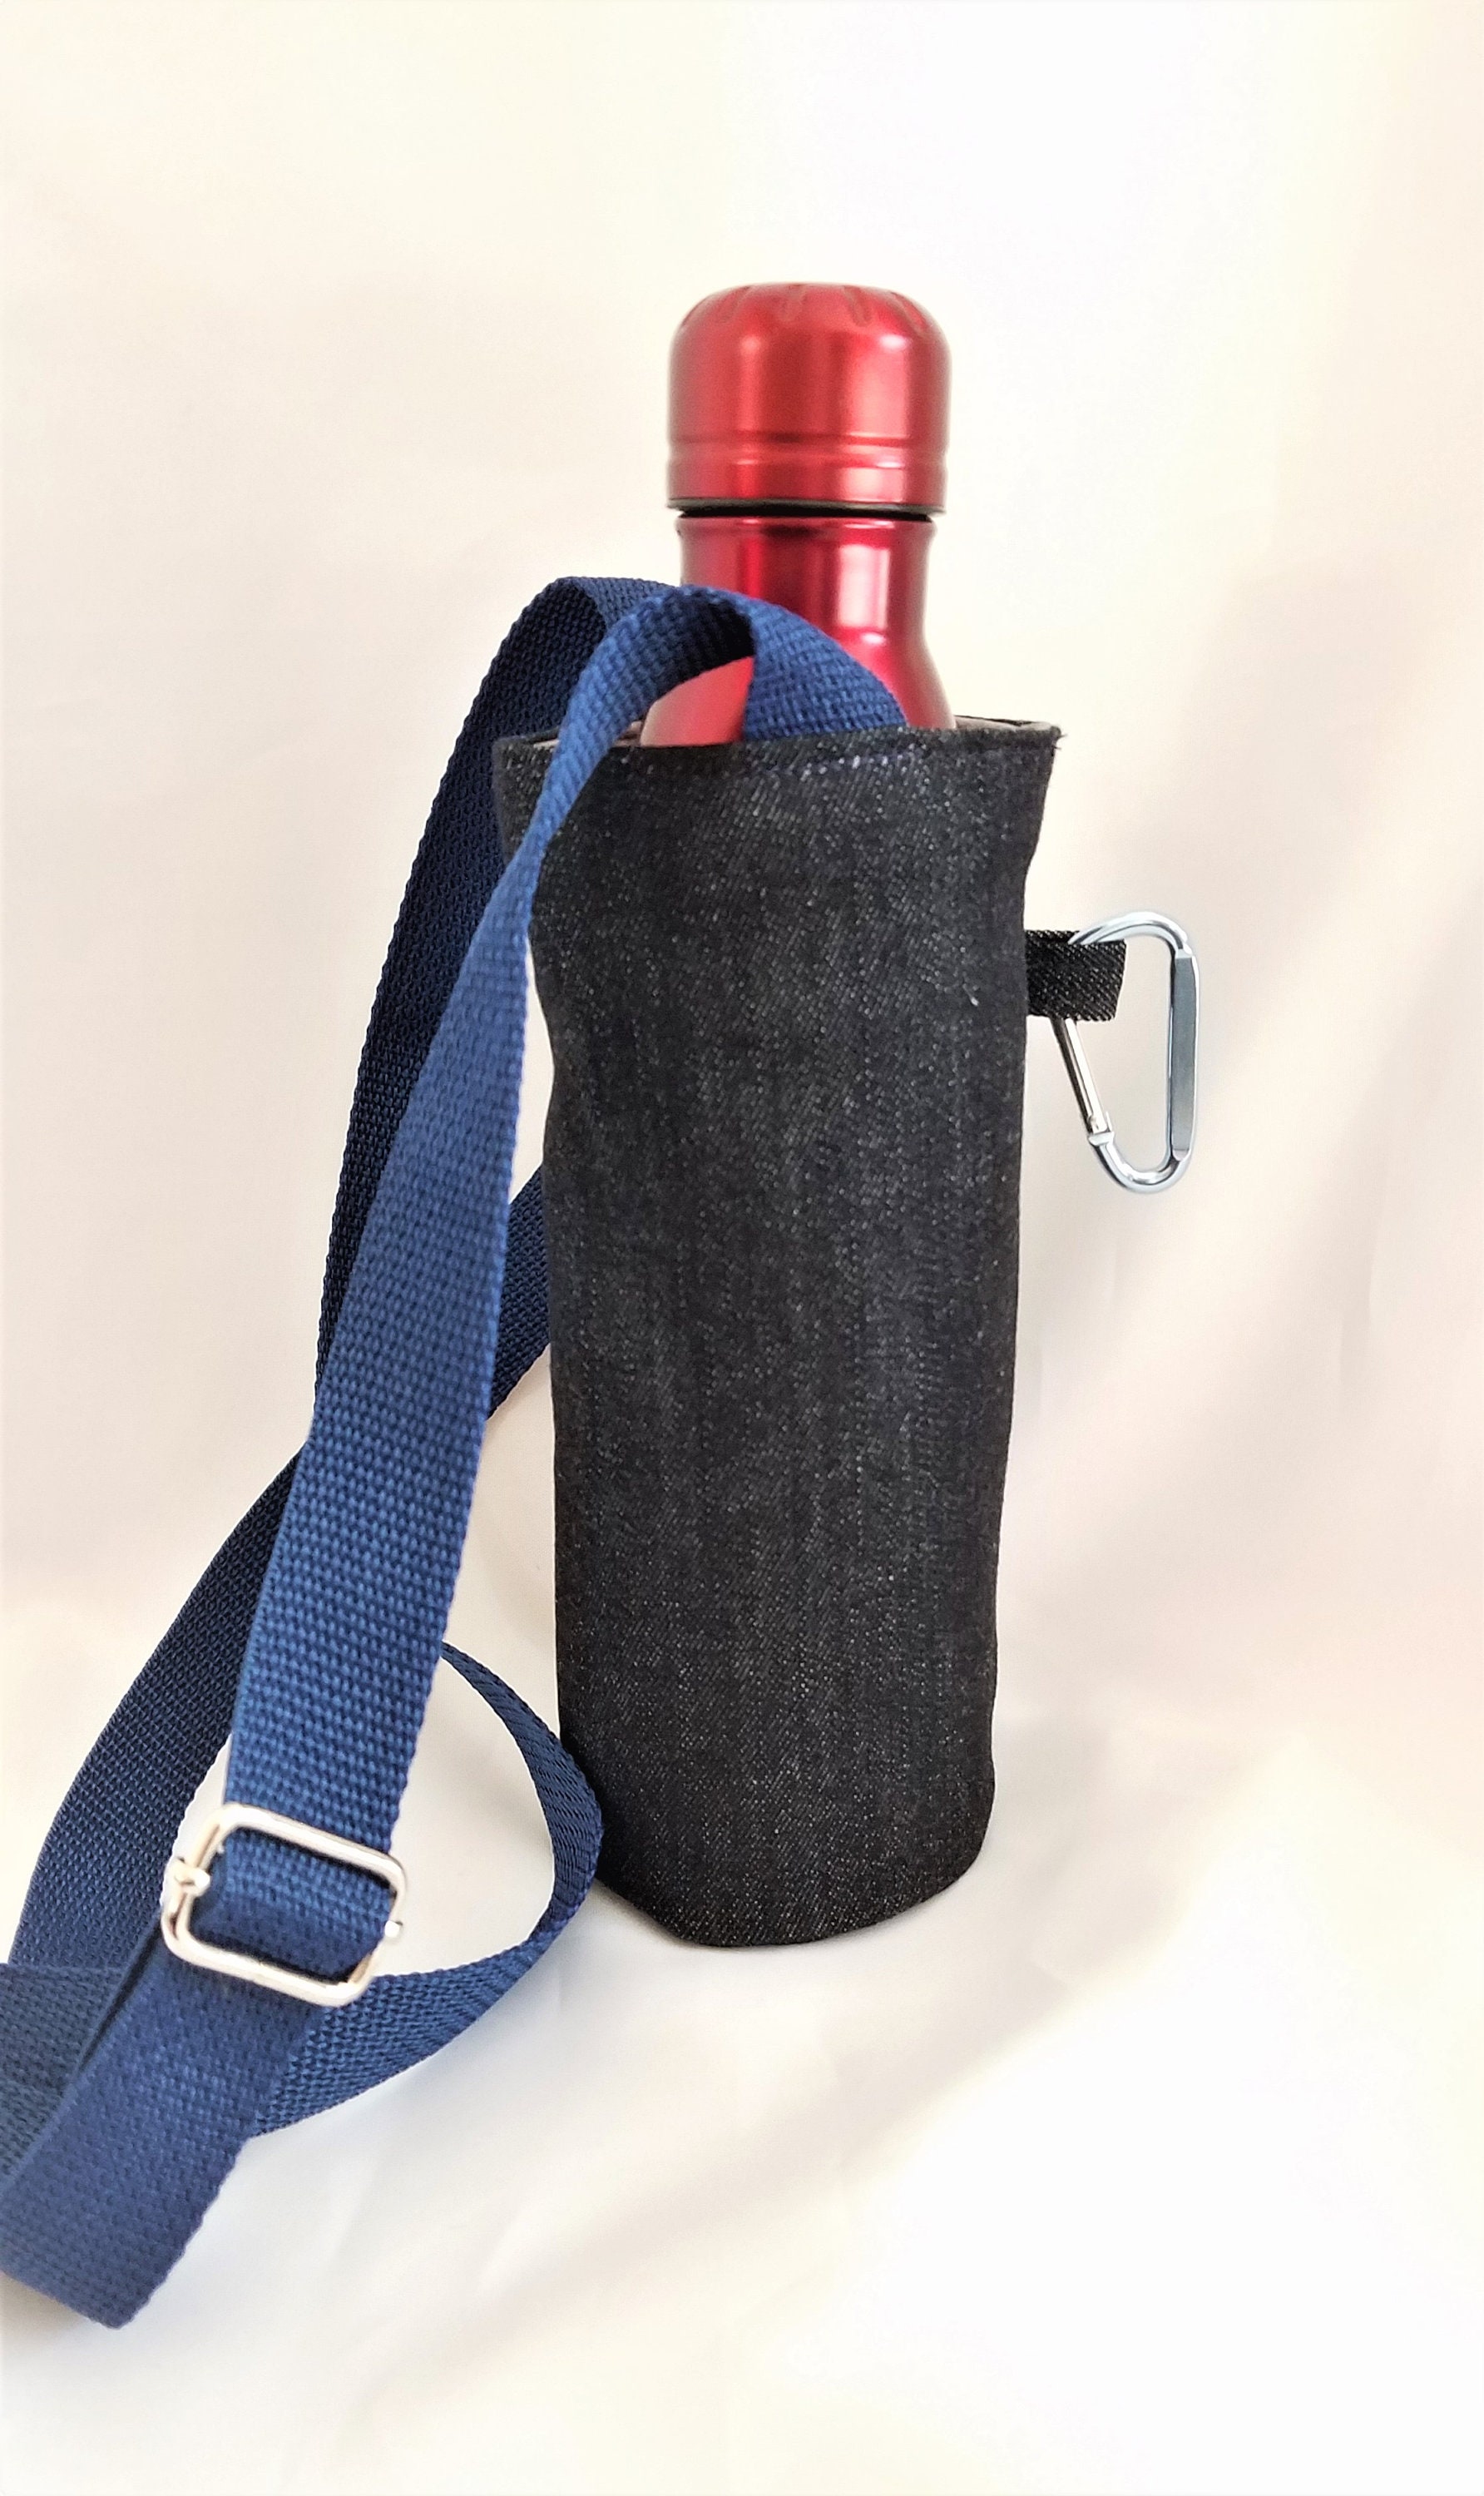 Bottle Amigo - Bottle Holder for Chevy Silverado and GMC Sierra